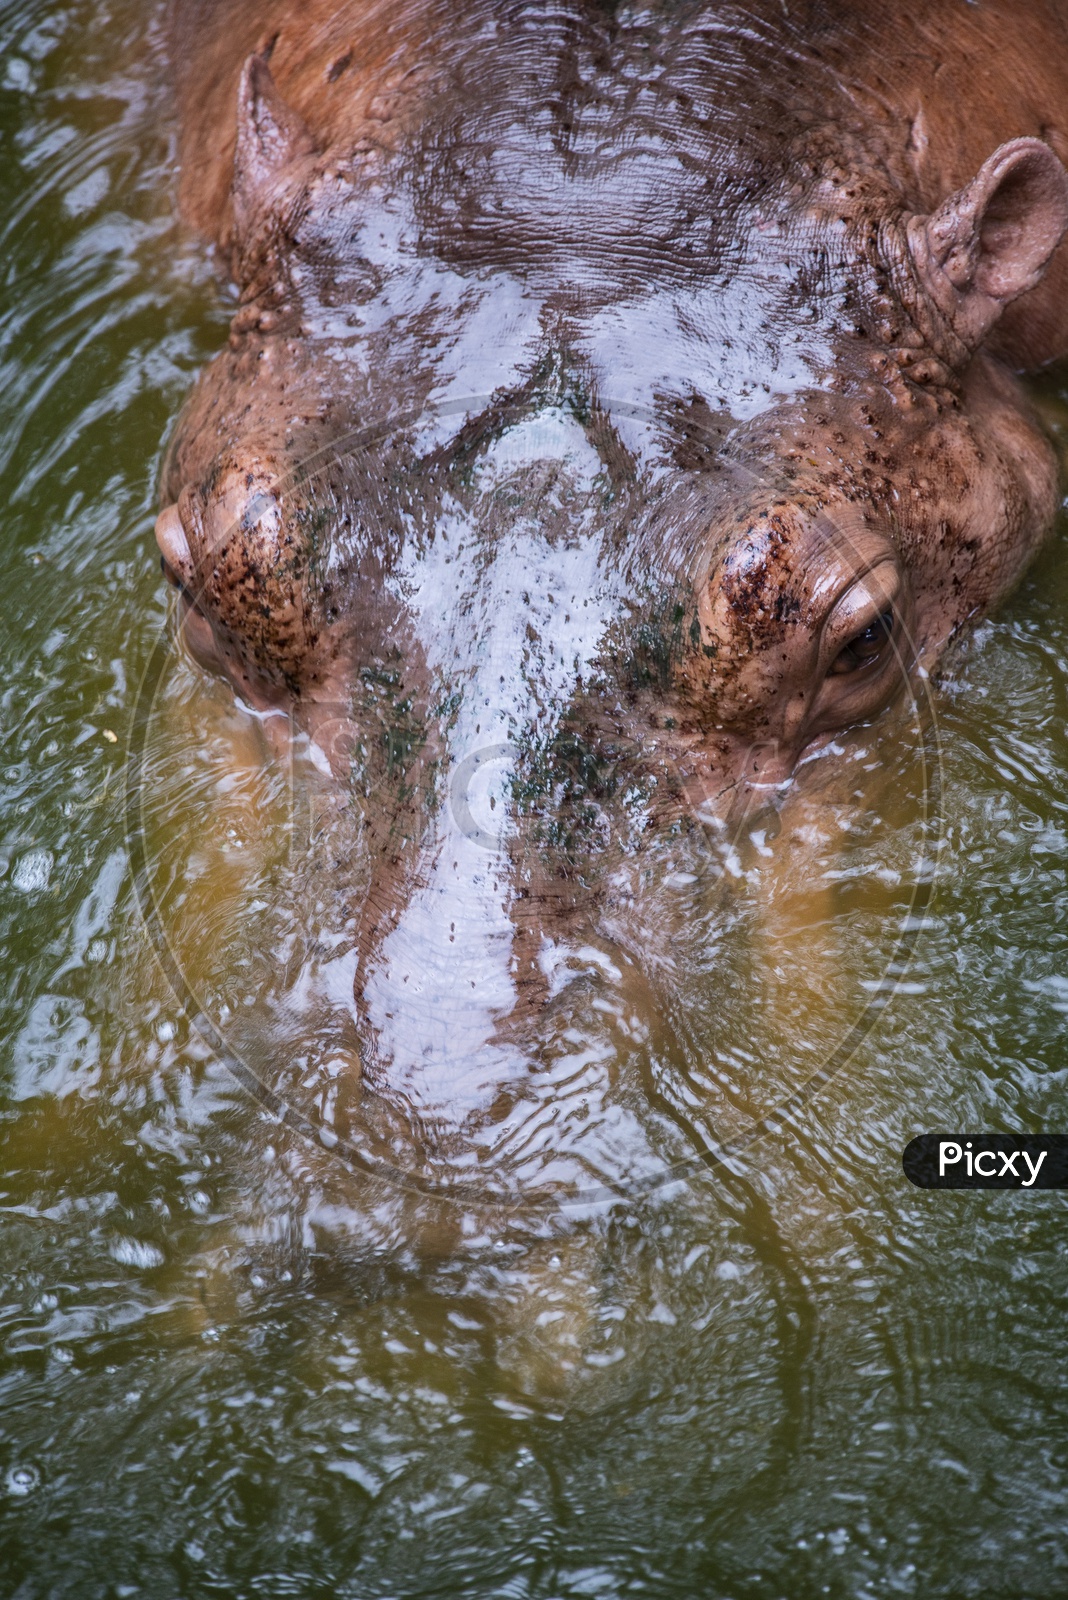 A Hippopotamus in the water